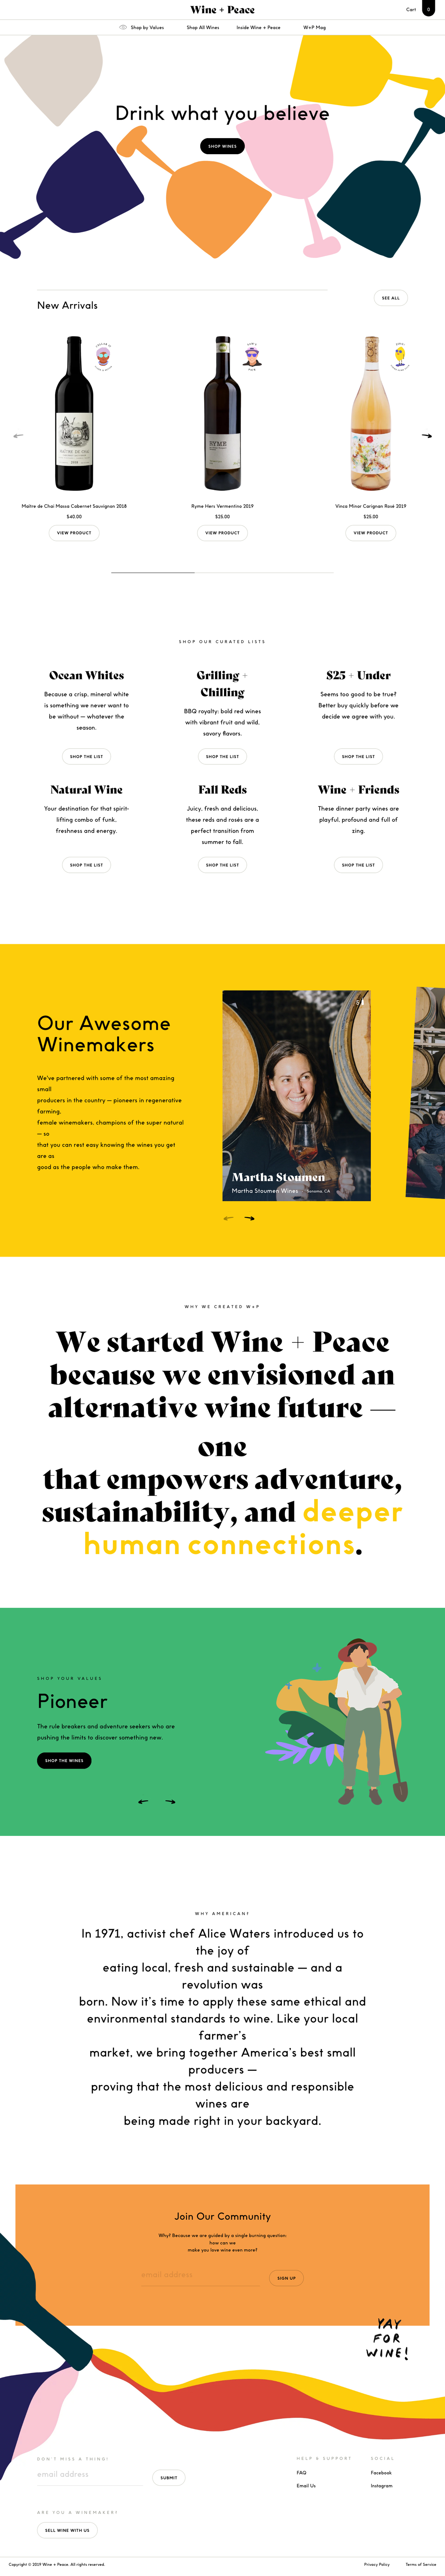 Wine + Peace葡萄酒在线购物网站设计